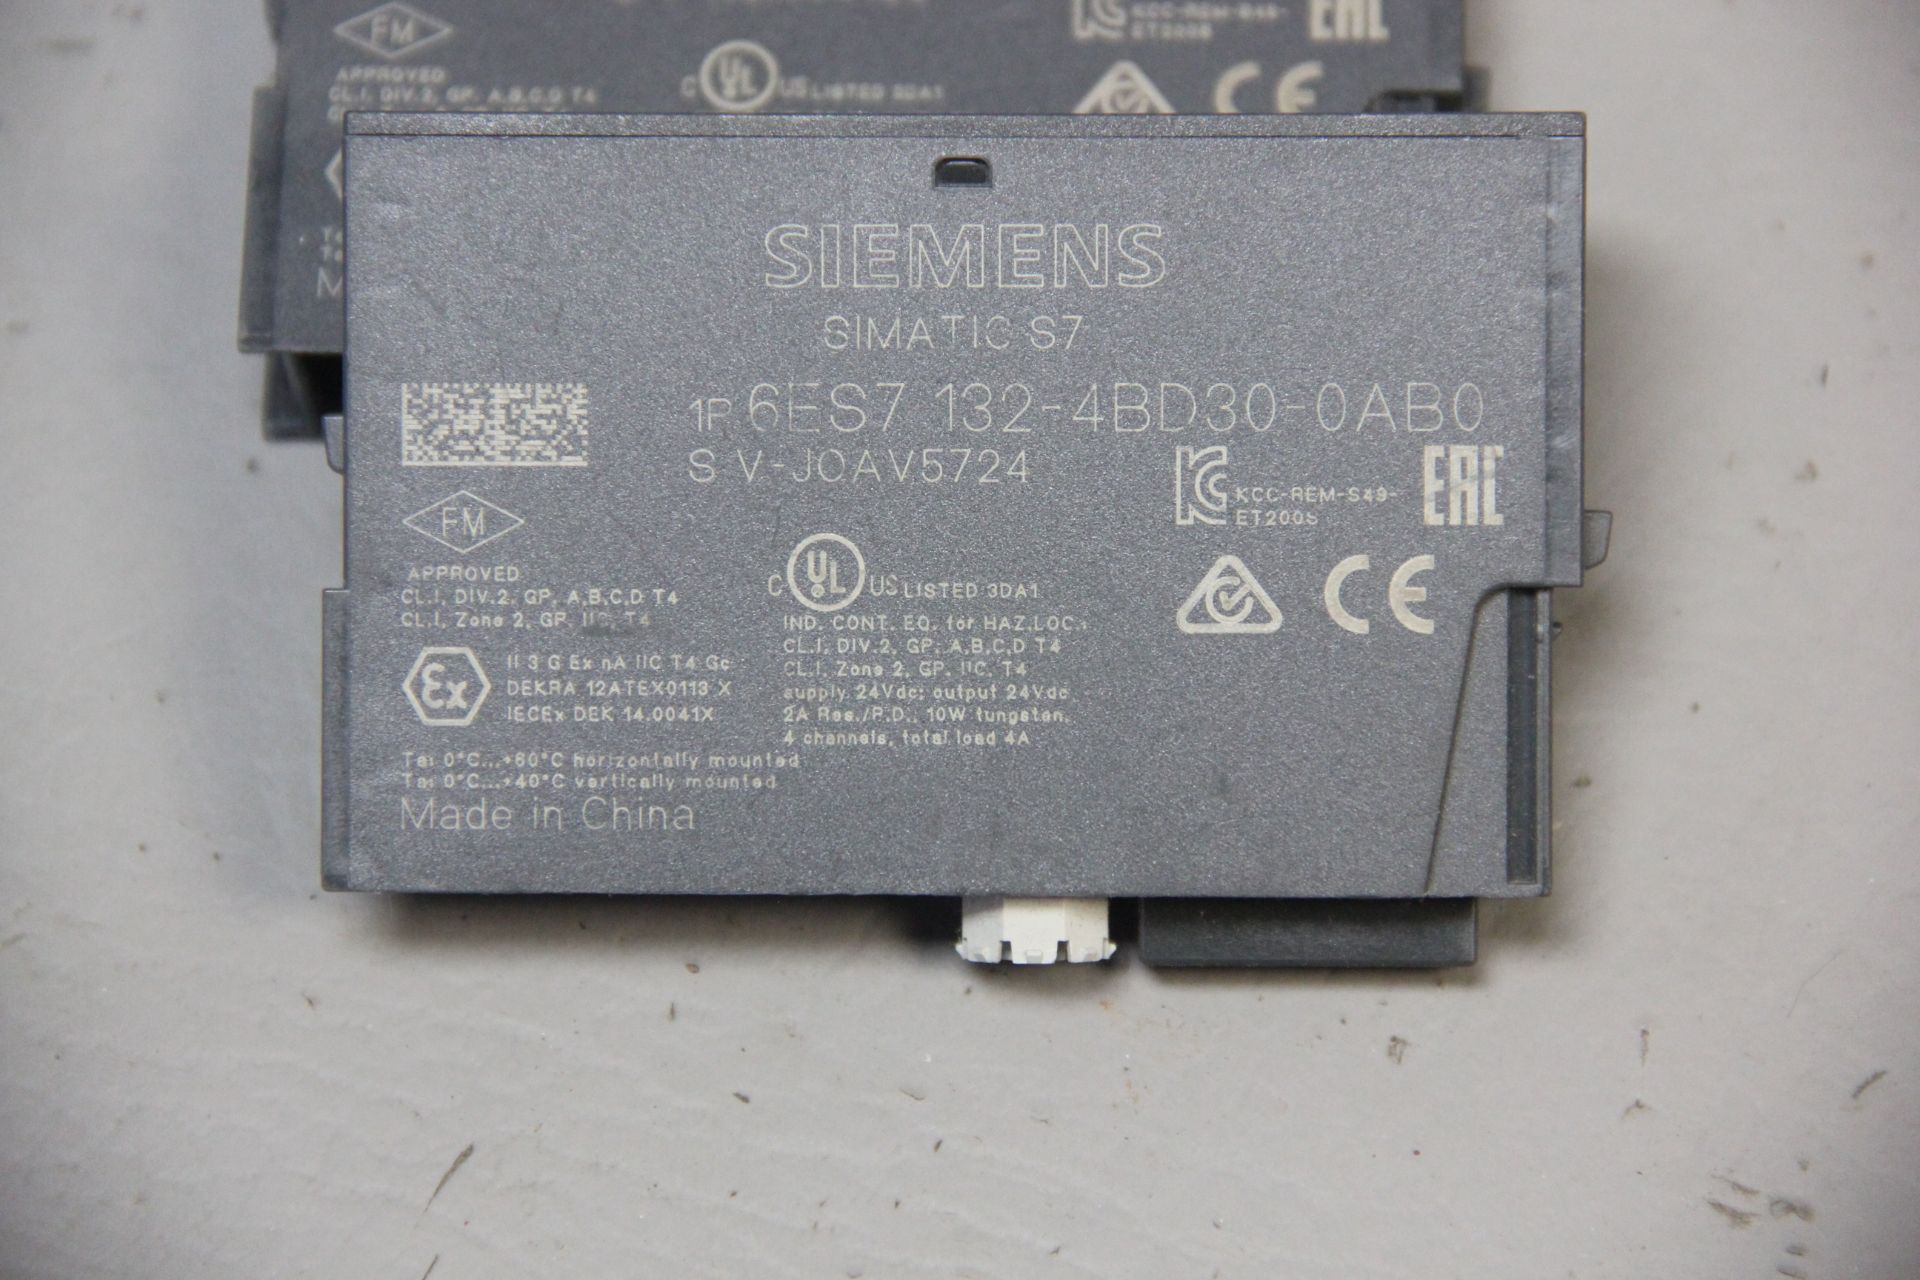 SIEMENS SIMATIC S7 ELECTRONIC MODULE - Image 2 of 2